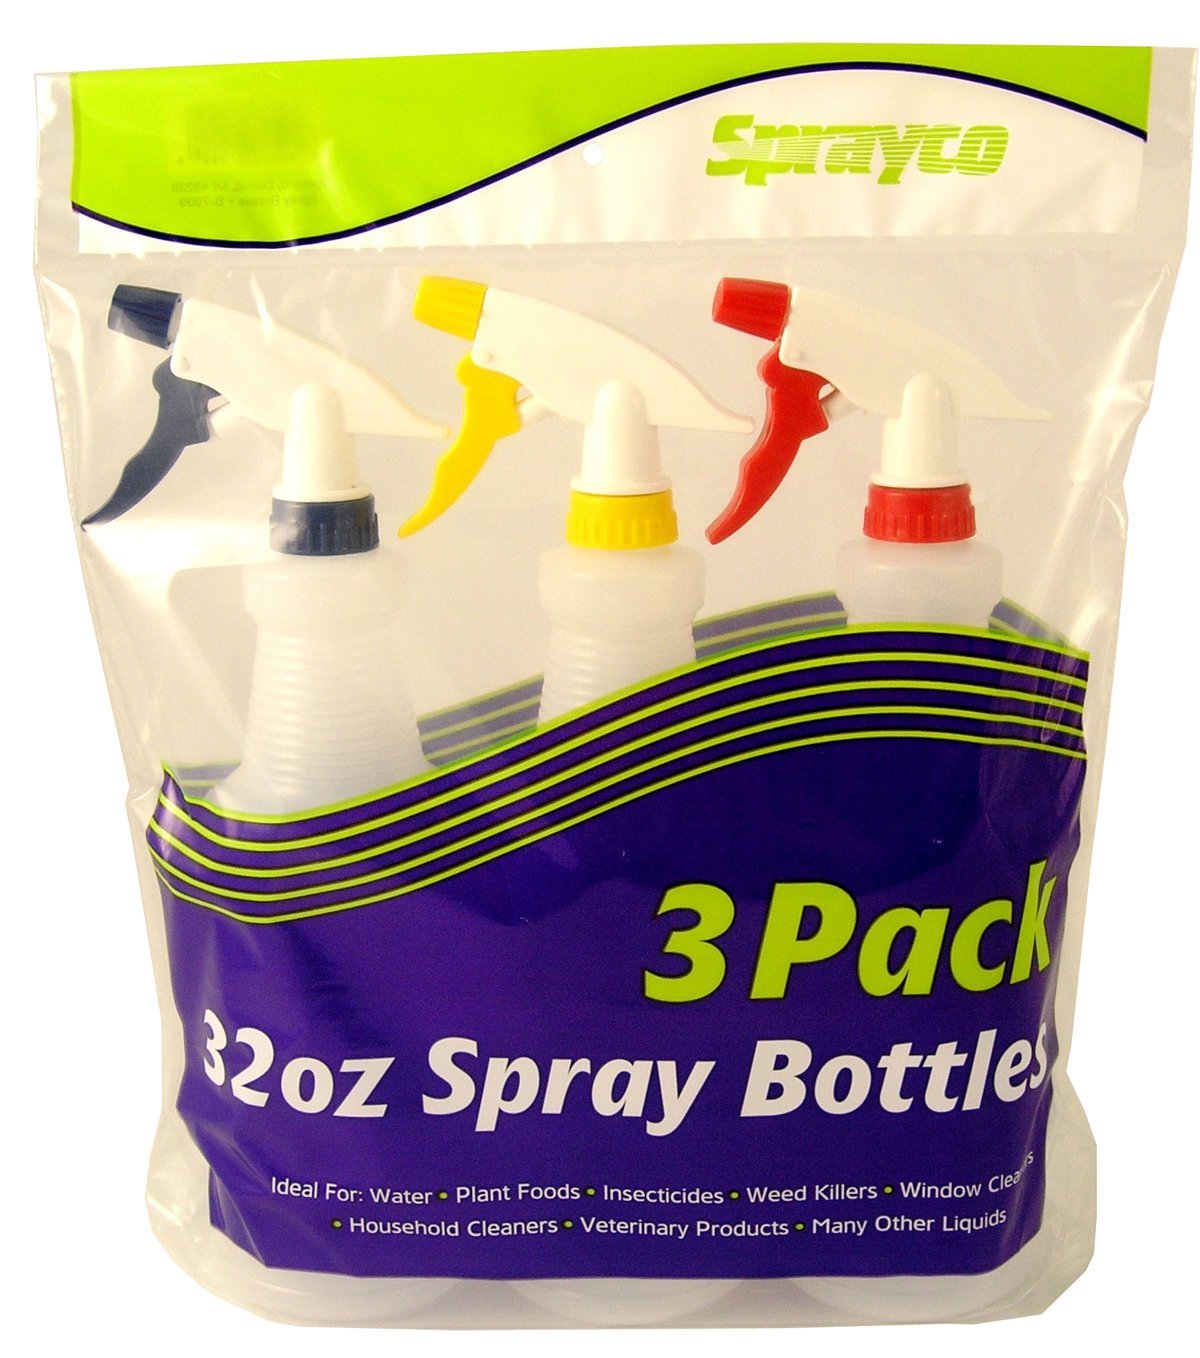 Sprayco 32 oz Spray Bottles 3 Count